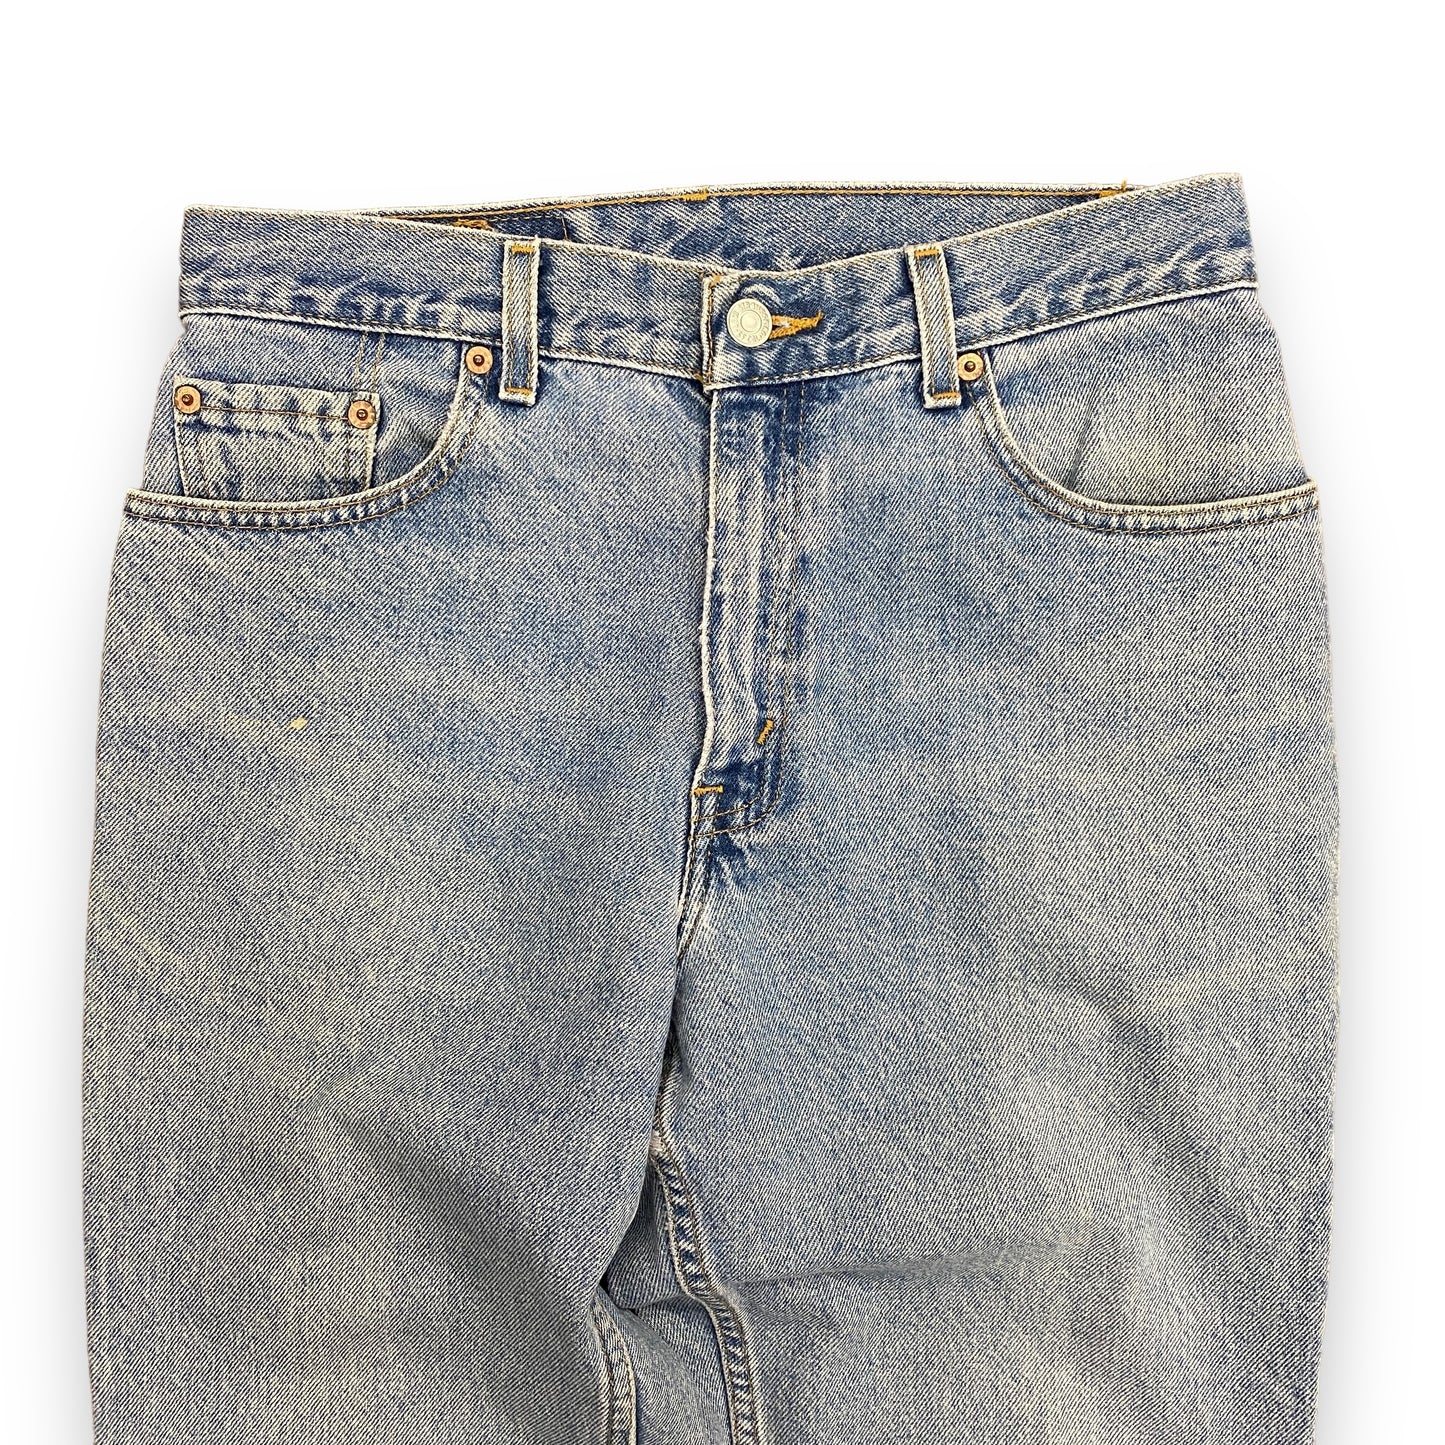 '00 Levi's 550 Medium Wash Jeans - 30"x29"